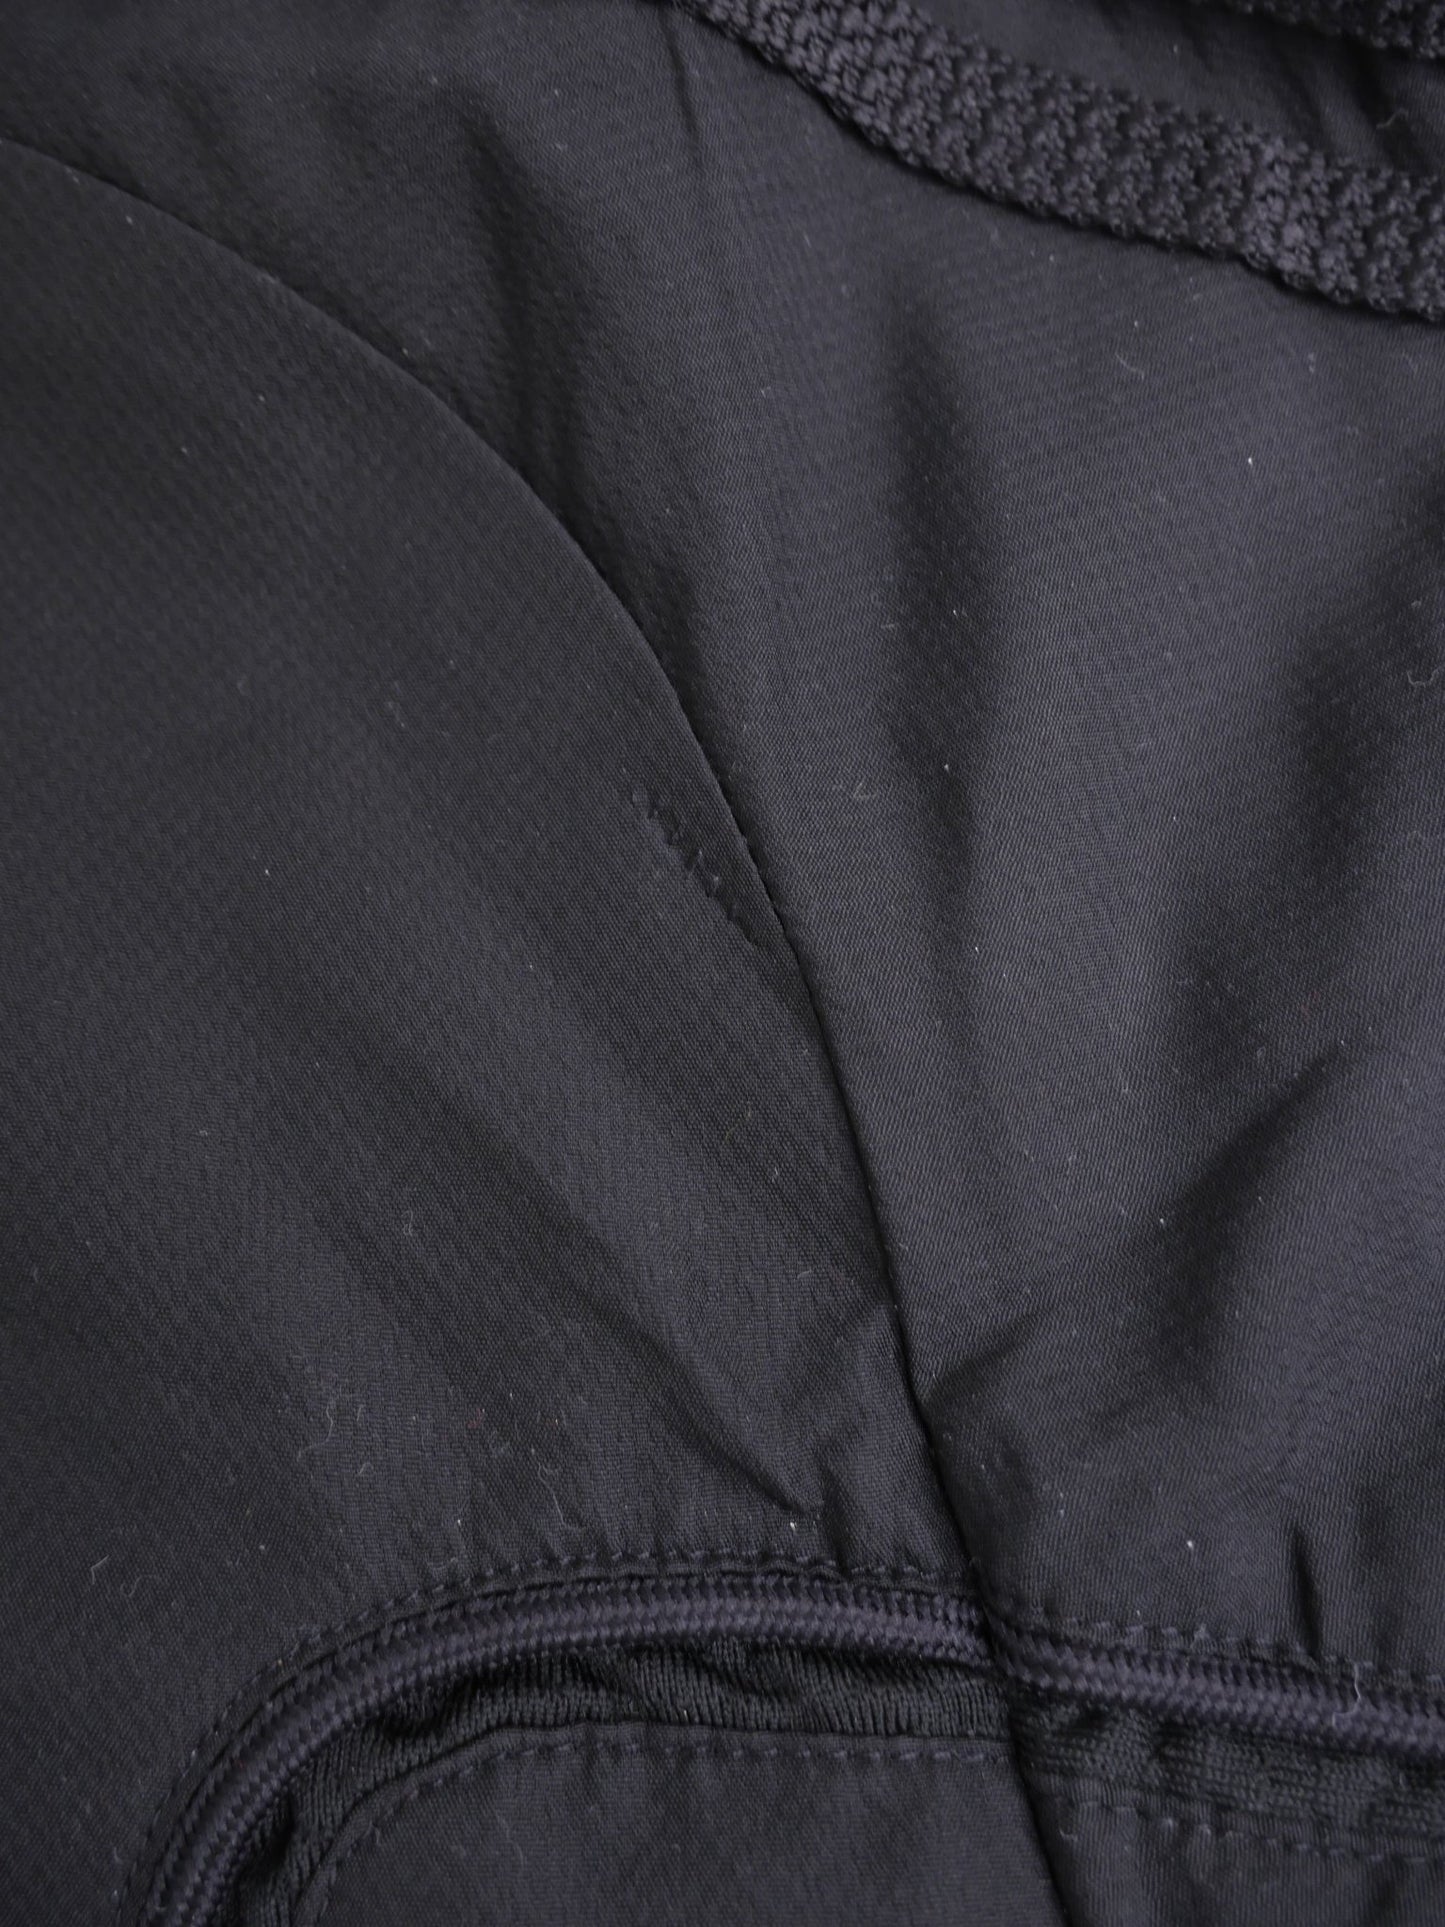 Adidas printed Logo black Track Jacket - Peeces